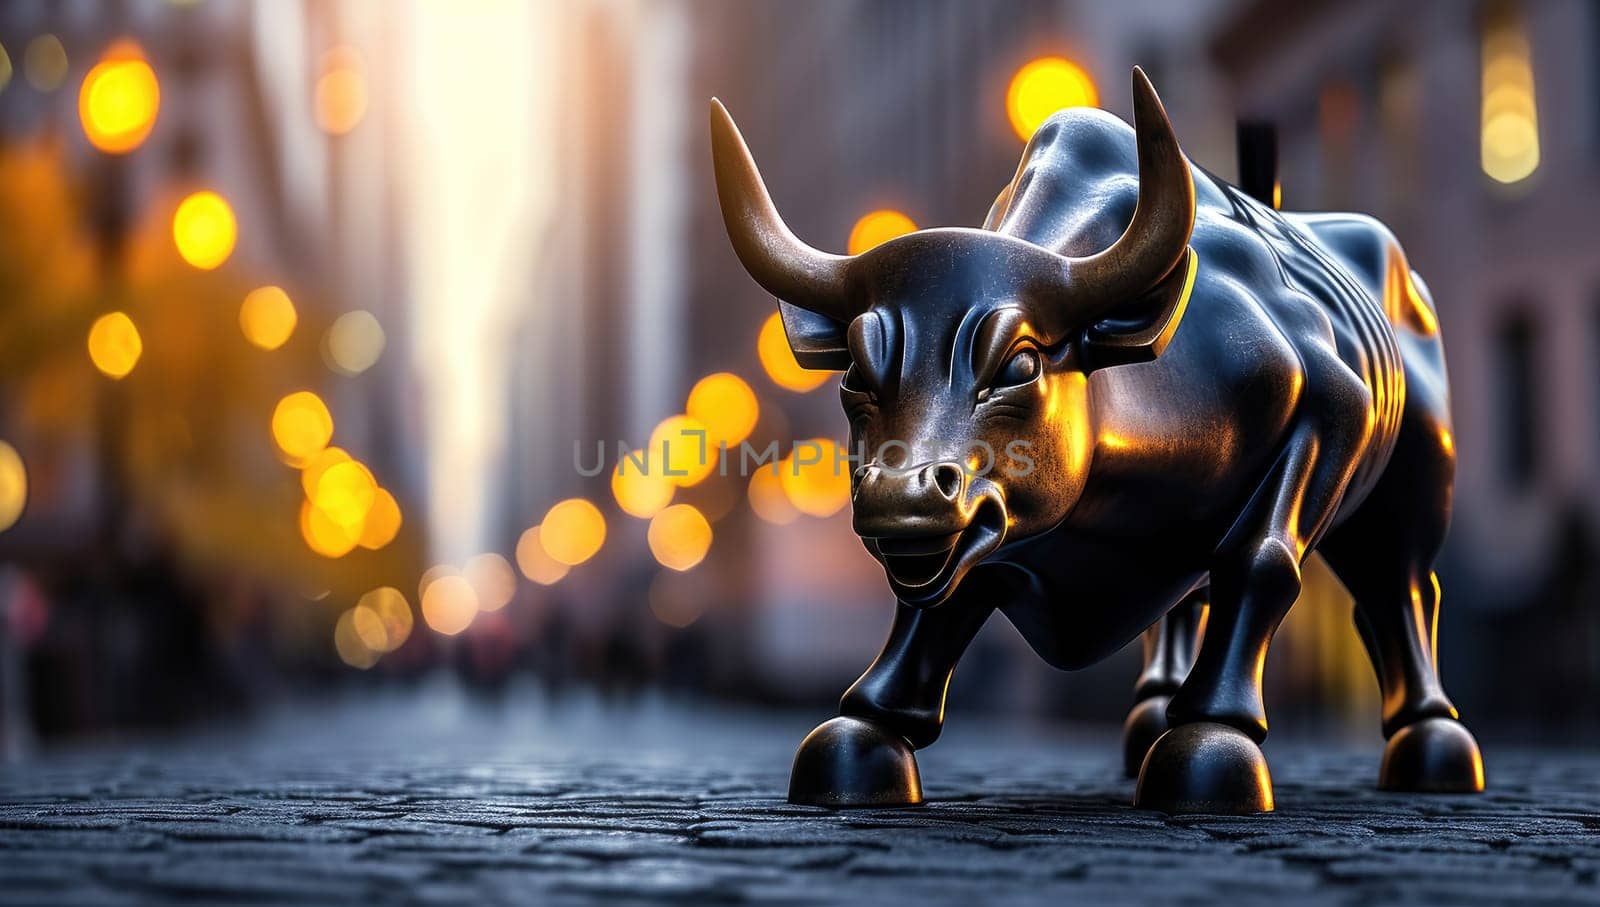 Golden bull standing powerfully in illuminated night city